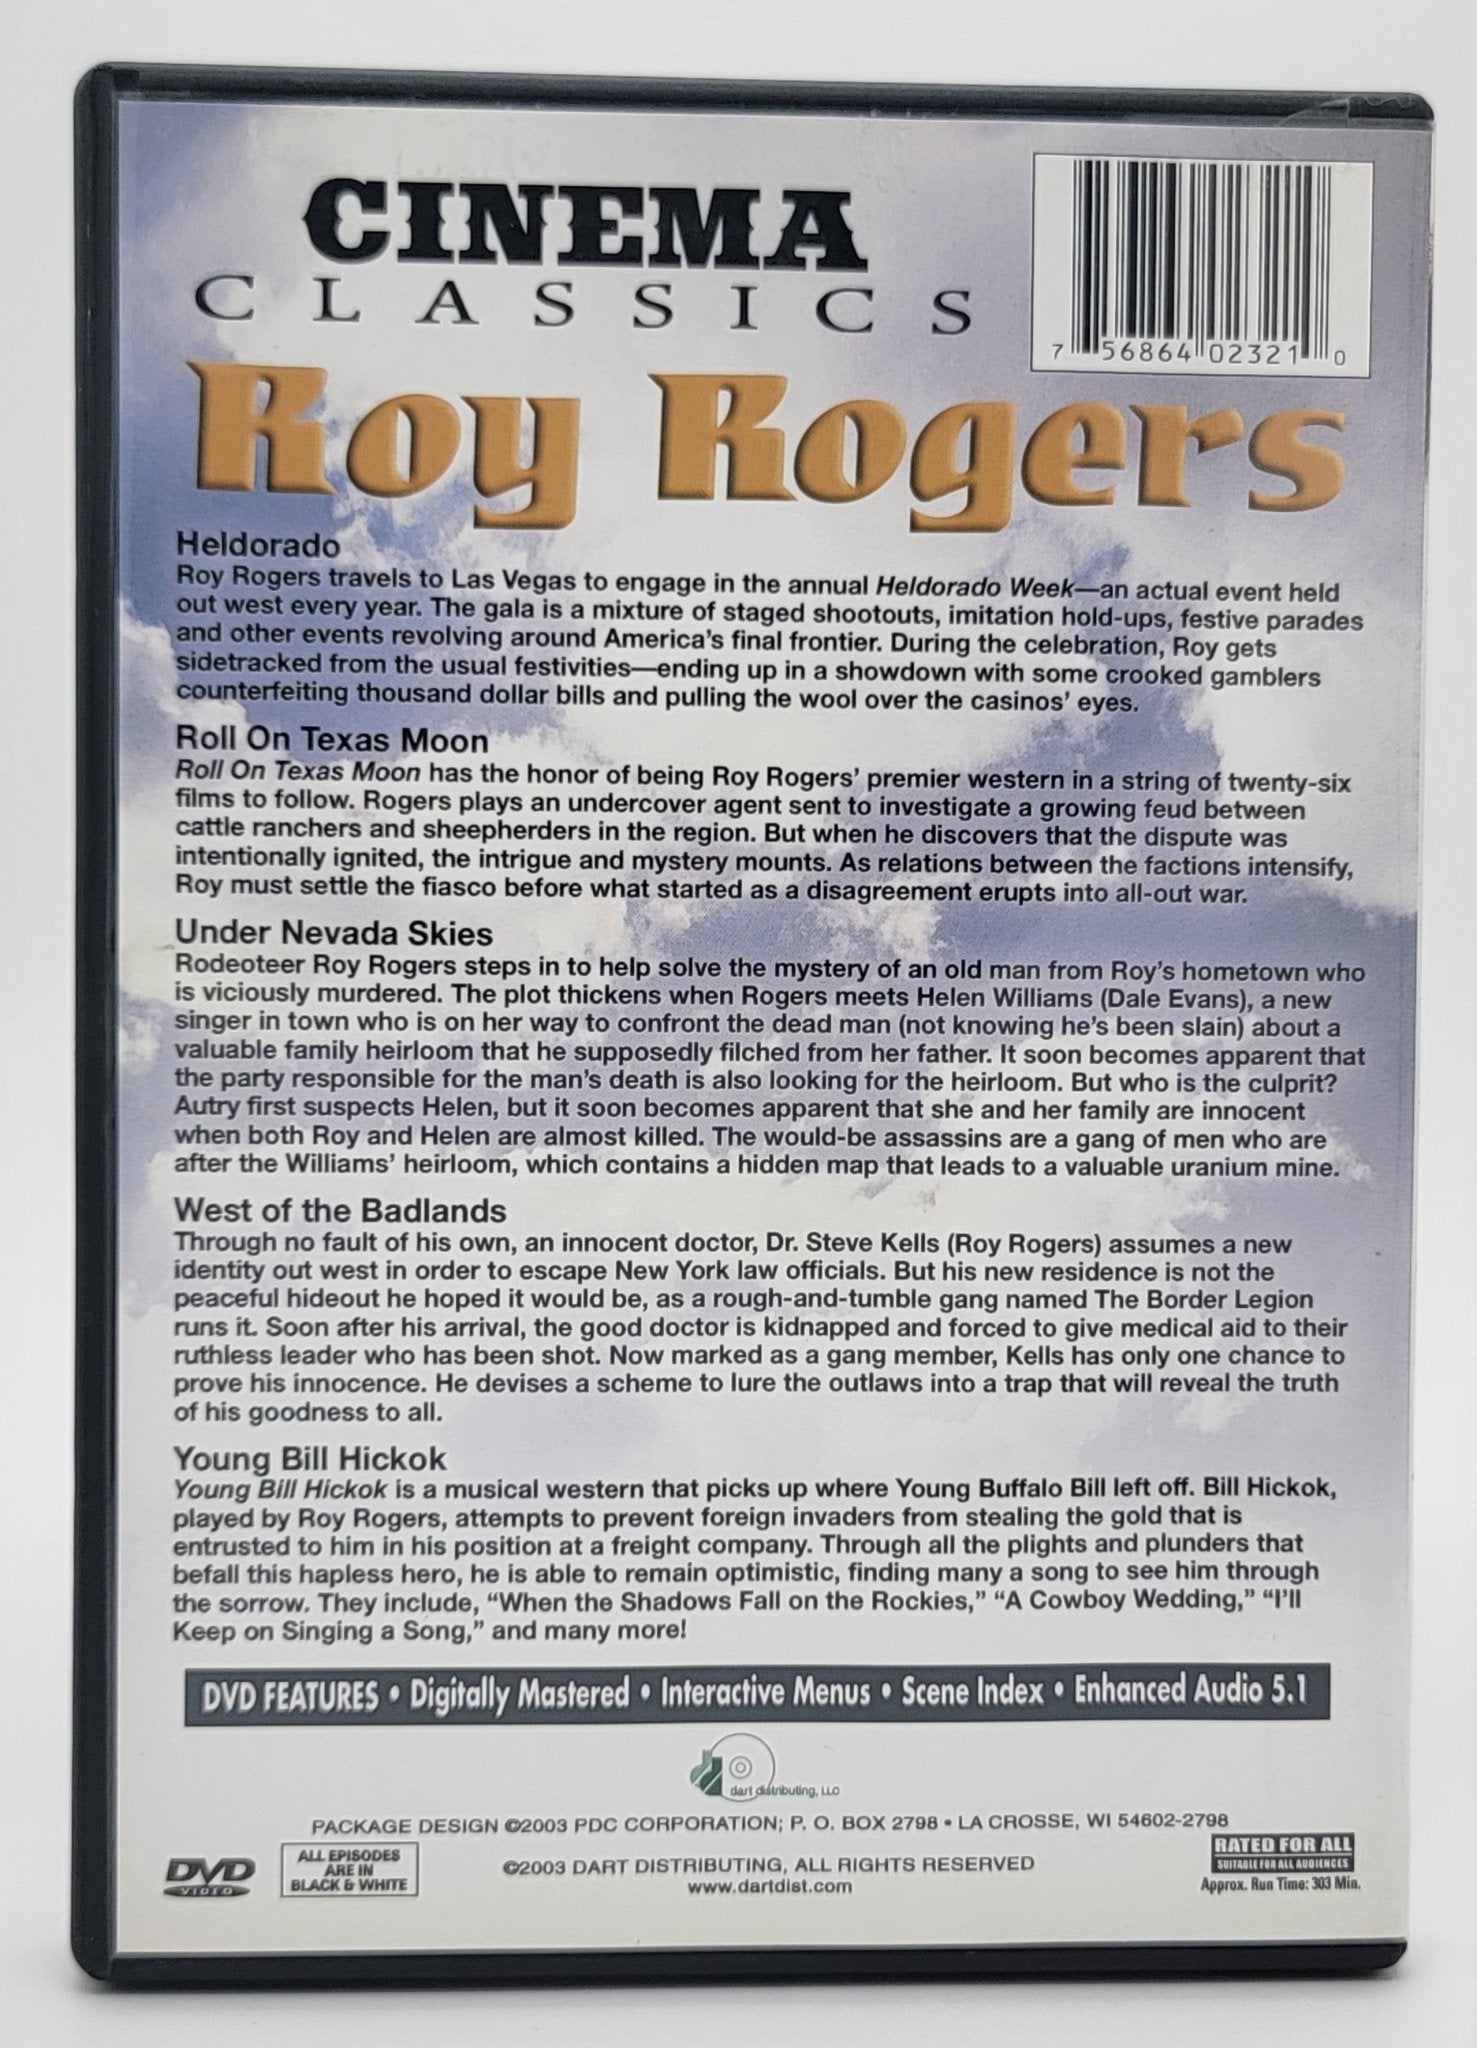 Dart Distributing - Cinema Classics Roy Rogers - 5 Episodes | DVD | Enhanced Audio 5.1 - DVD - Steady Bunny Shop